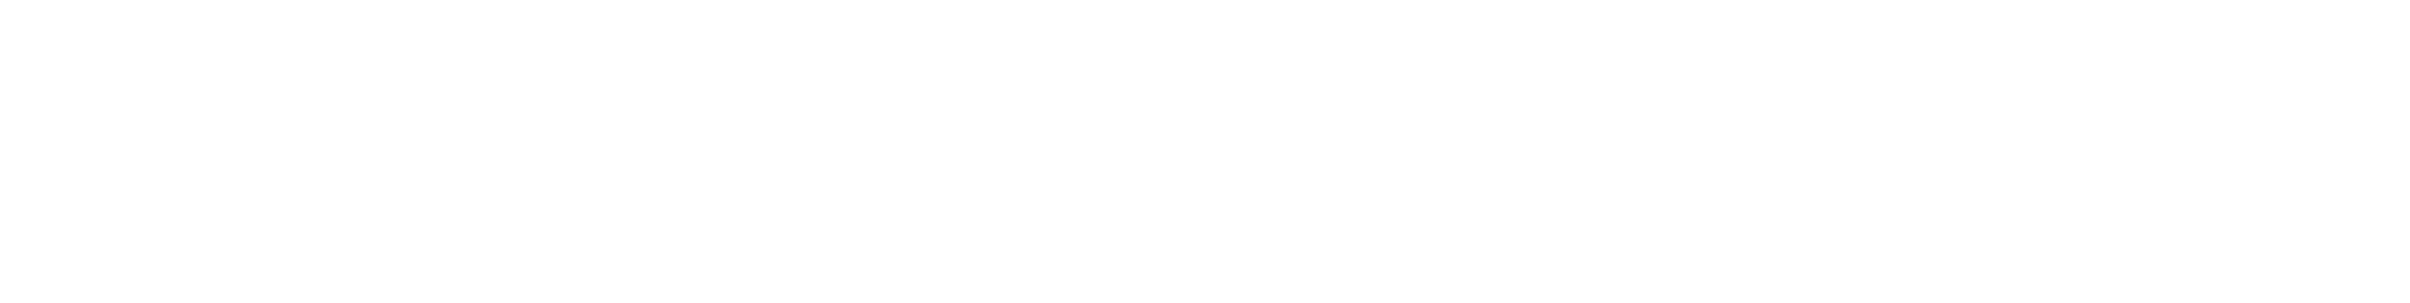 The Whitworth logo